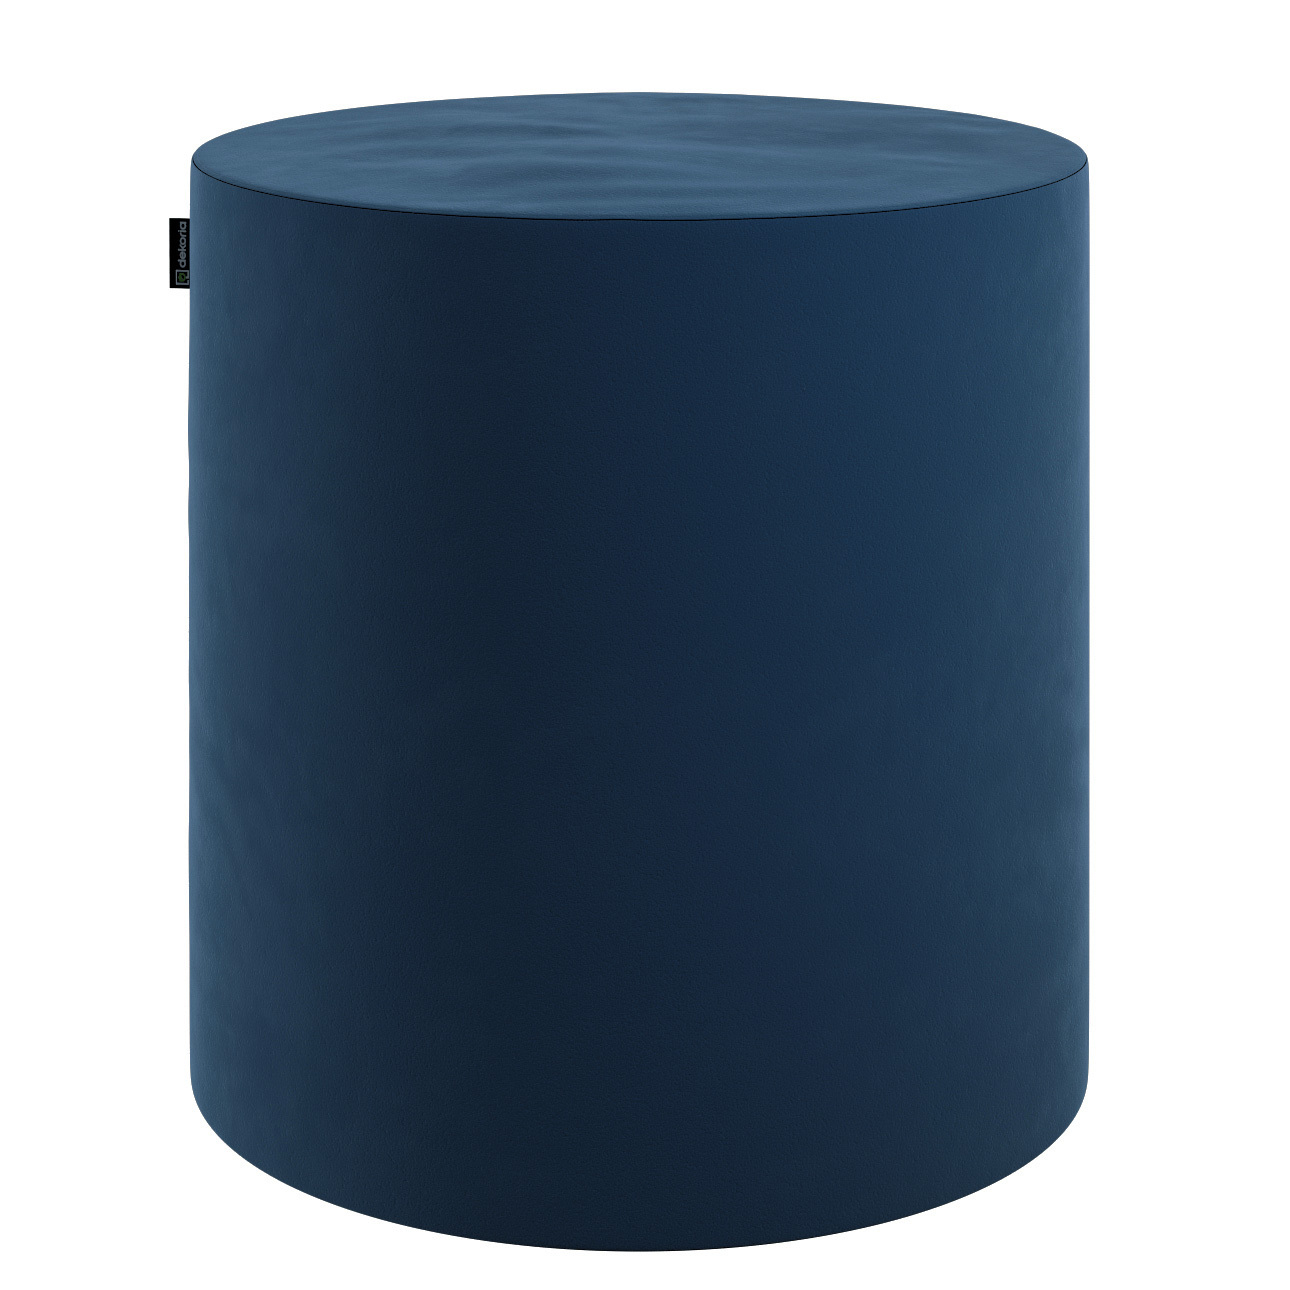 Pouf Barrel, dunkelblau, ø40 cm x 40 cm, Velvet (704-29) günstig online kaufen